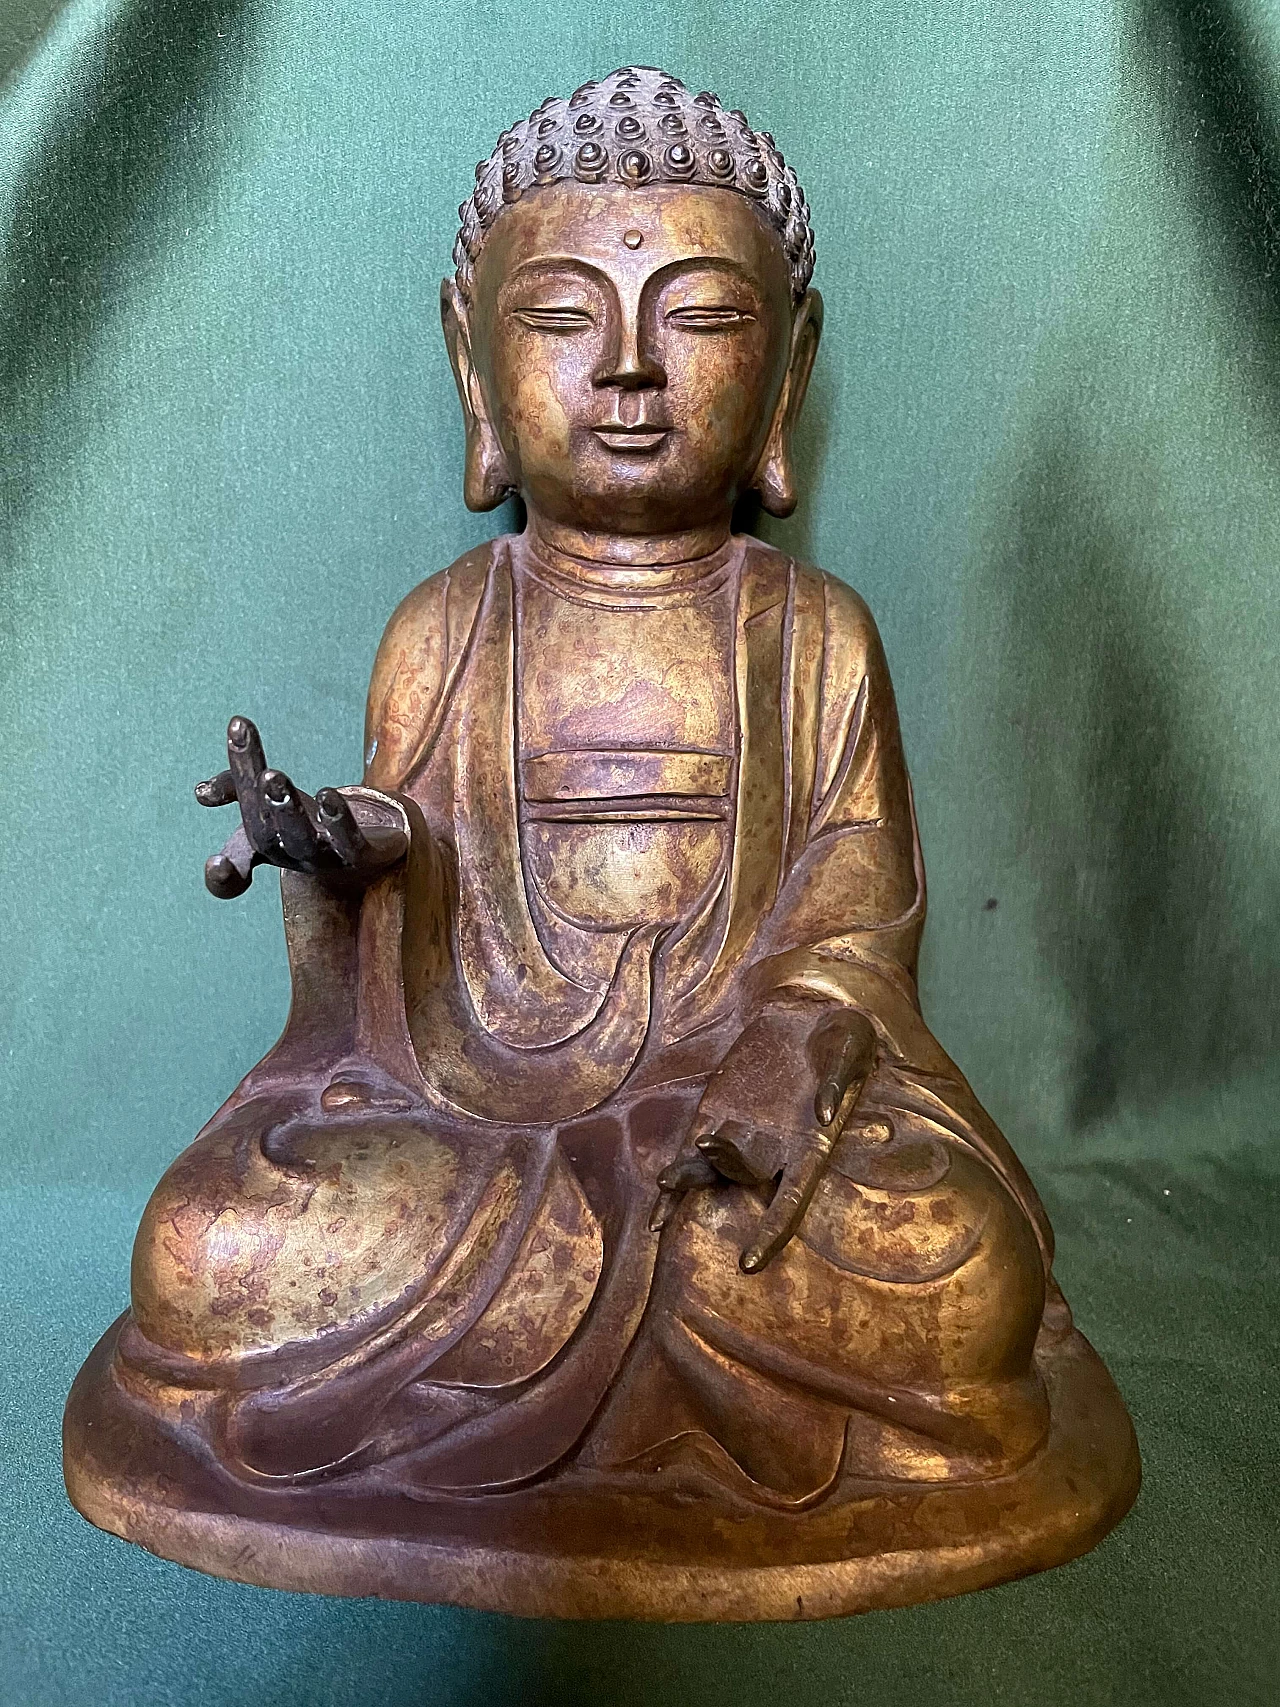 Seated bronze Buddha sculpture, 19th century 1480837